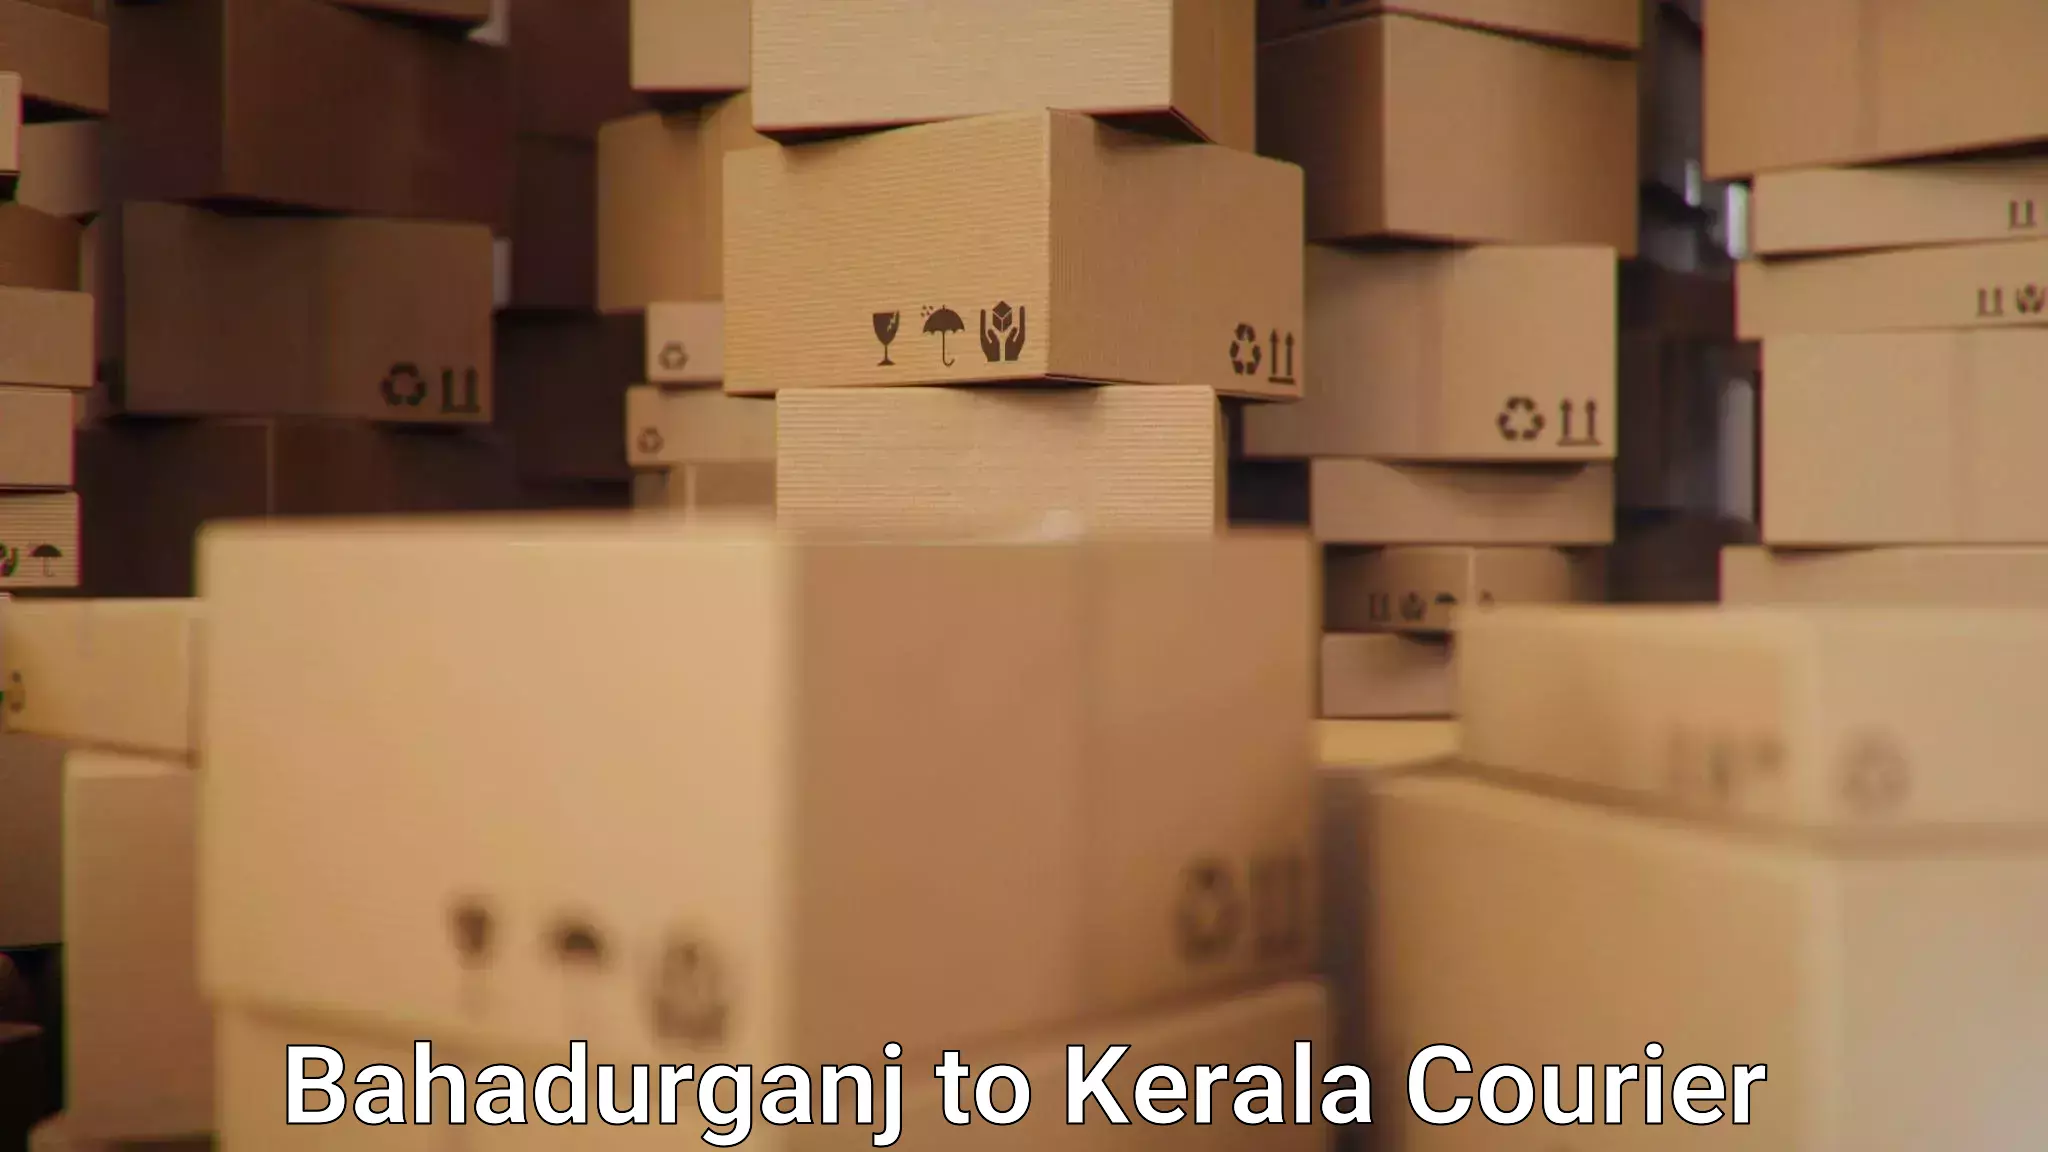 User-friendly courier app Bahadurganj to Kerala